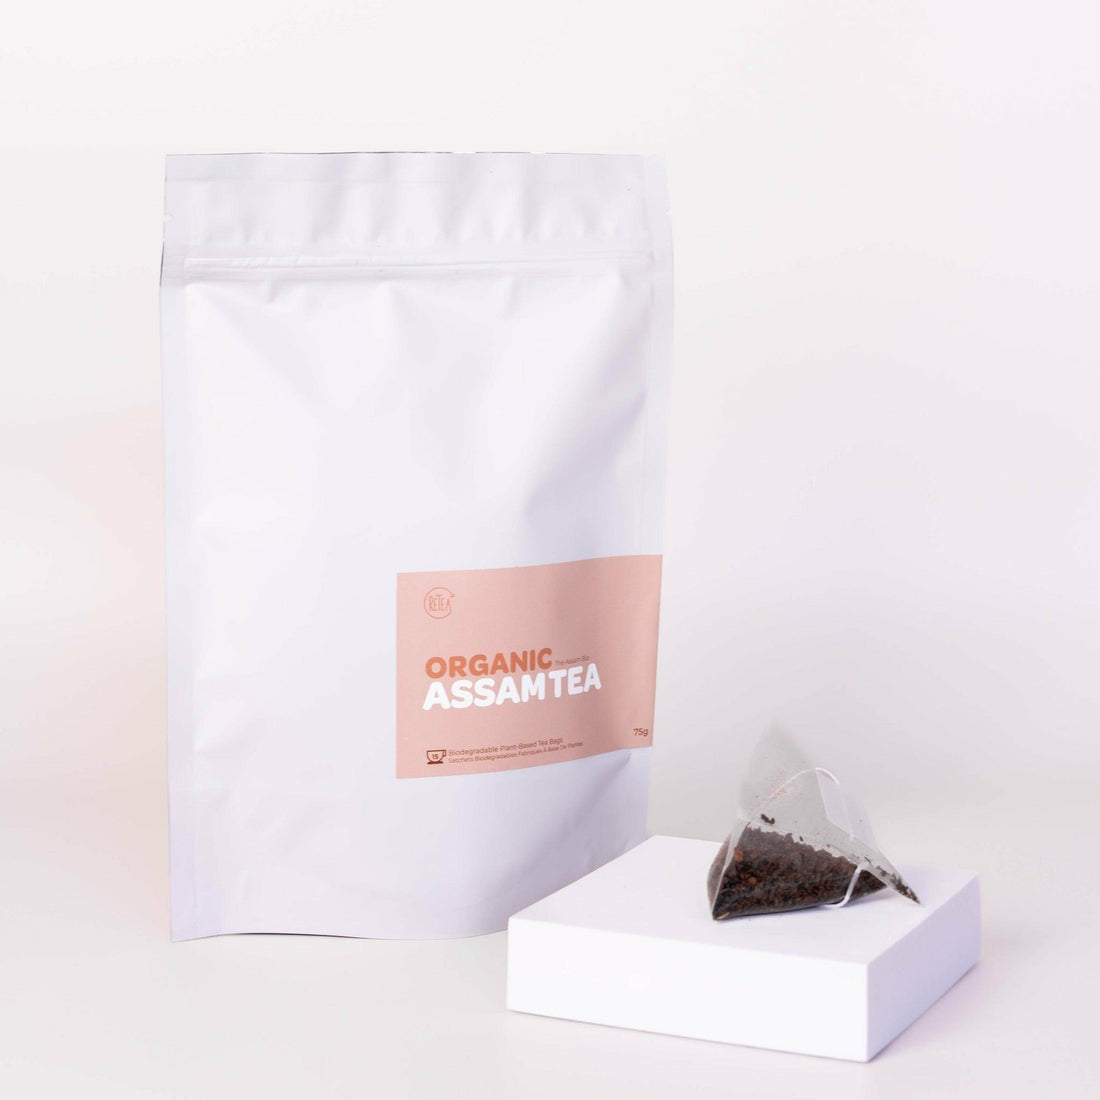 Large white packaged organic assam tea, 15 tea bags, 75 grams total, biodegradable plant-based tea bag with assam black tea display in front